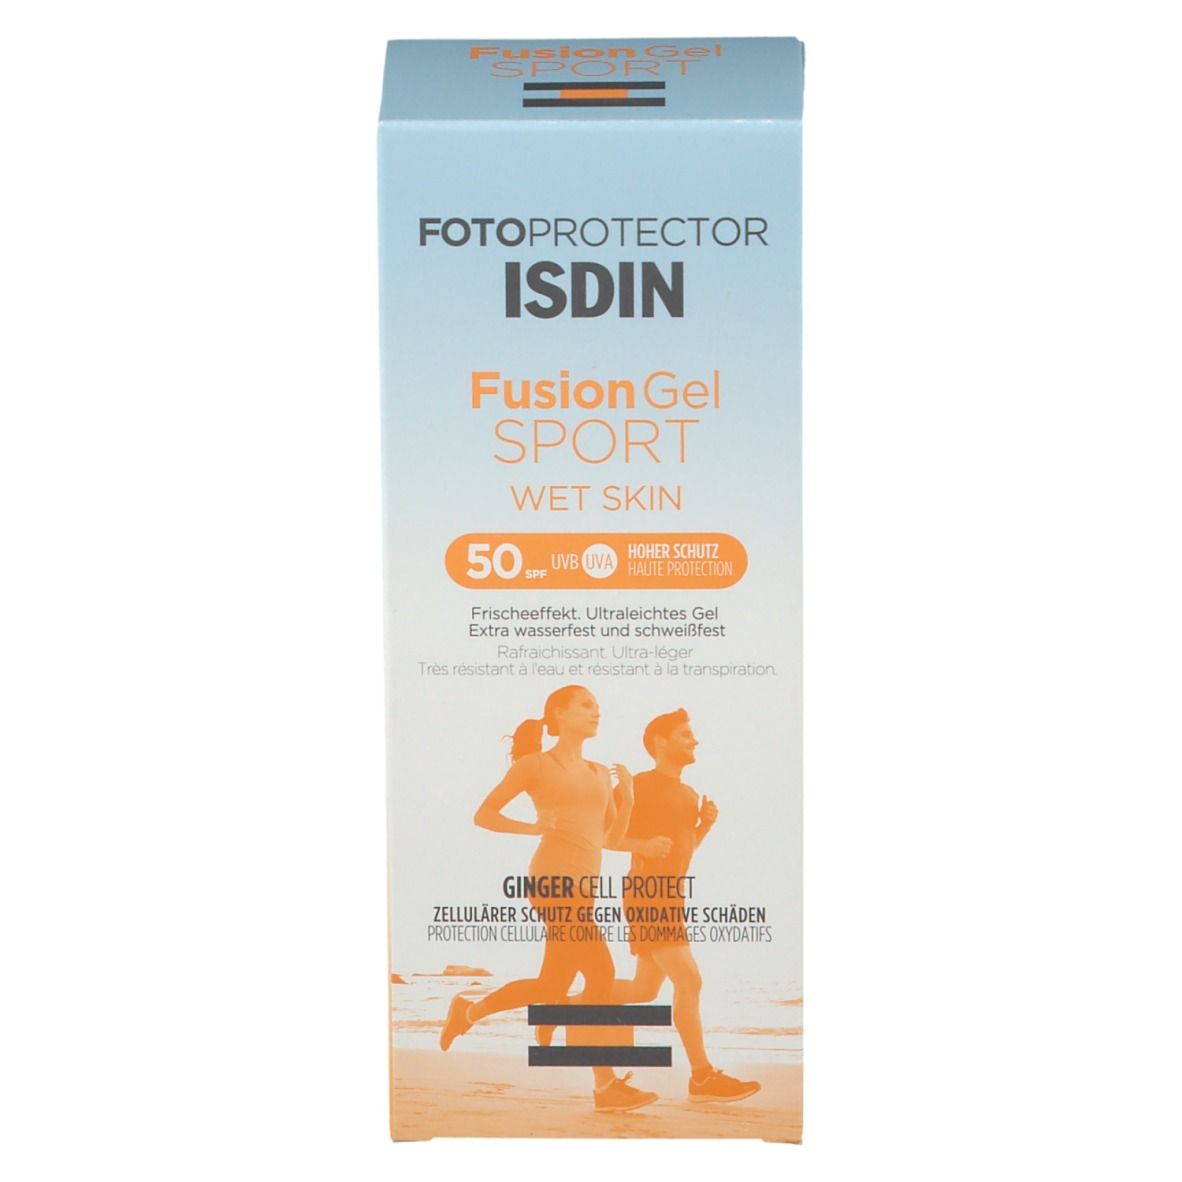 Fotoprotector ISDIN Fusion Gel Sport LSF 50